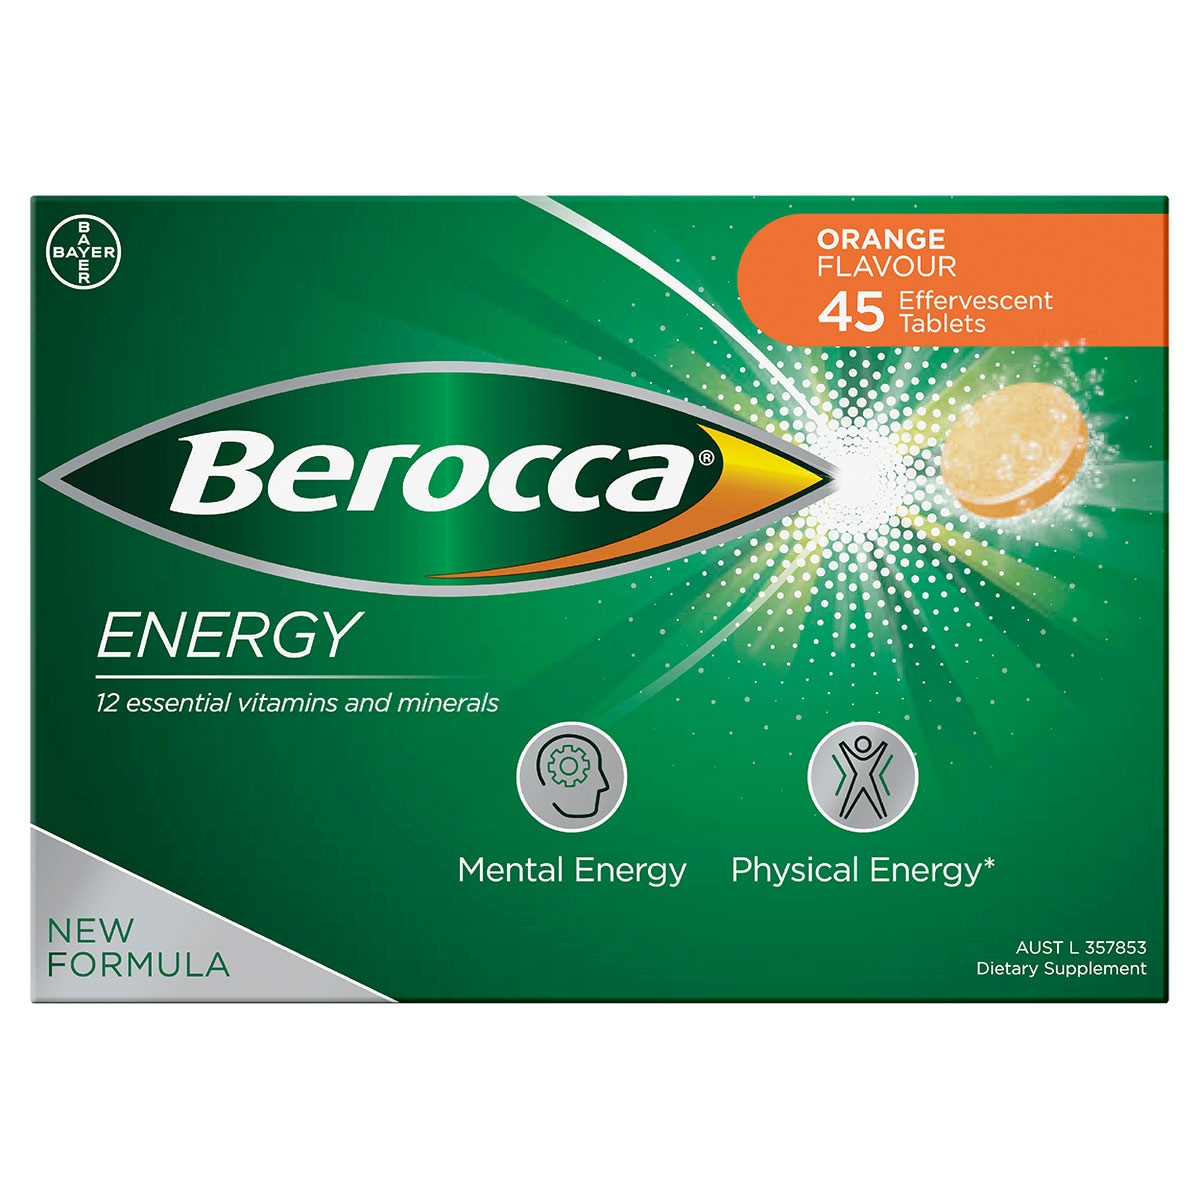 Berocca Energy Orange 45 Effervescent Tablets Australia